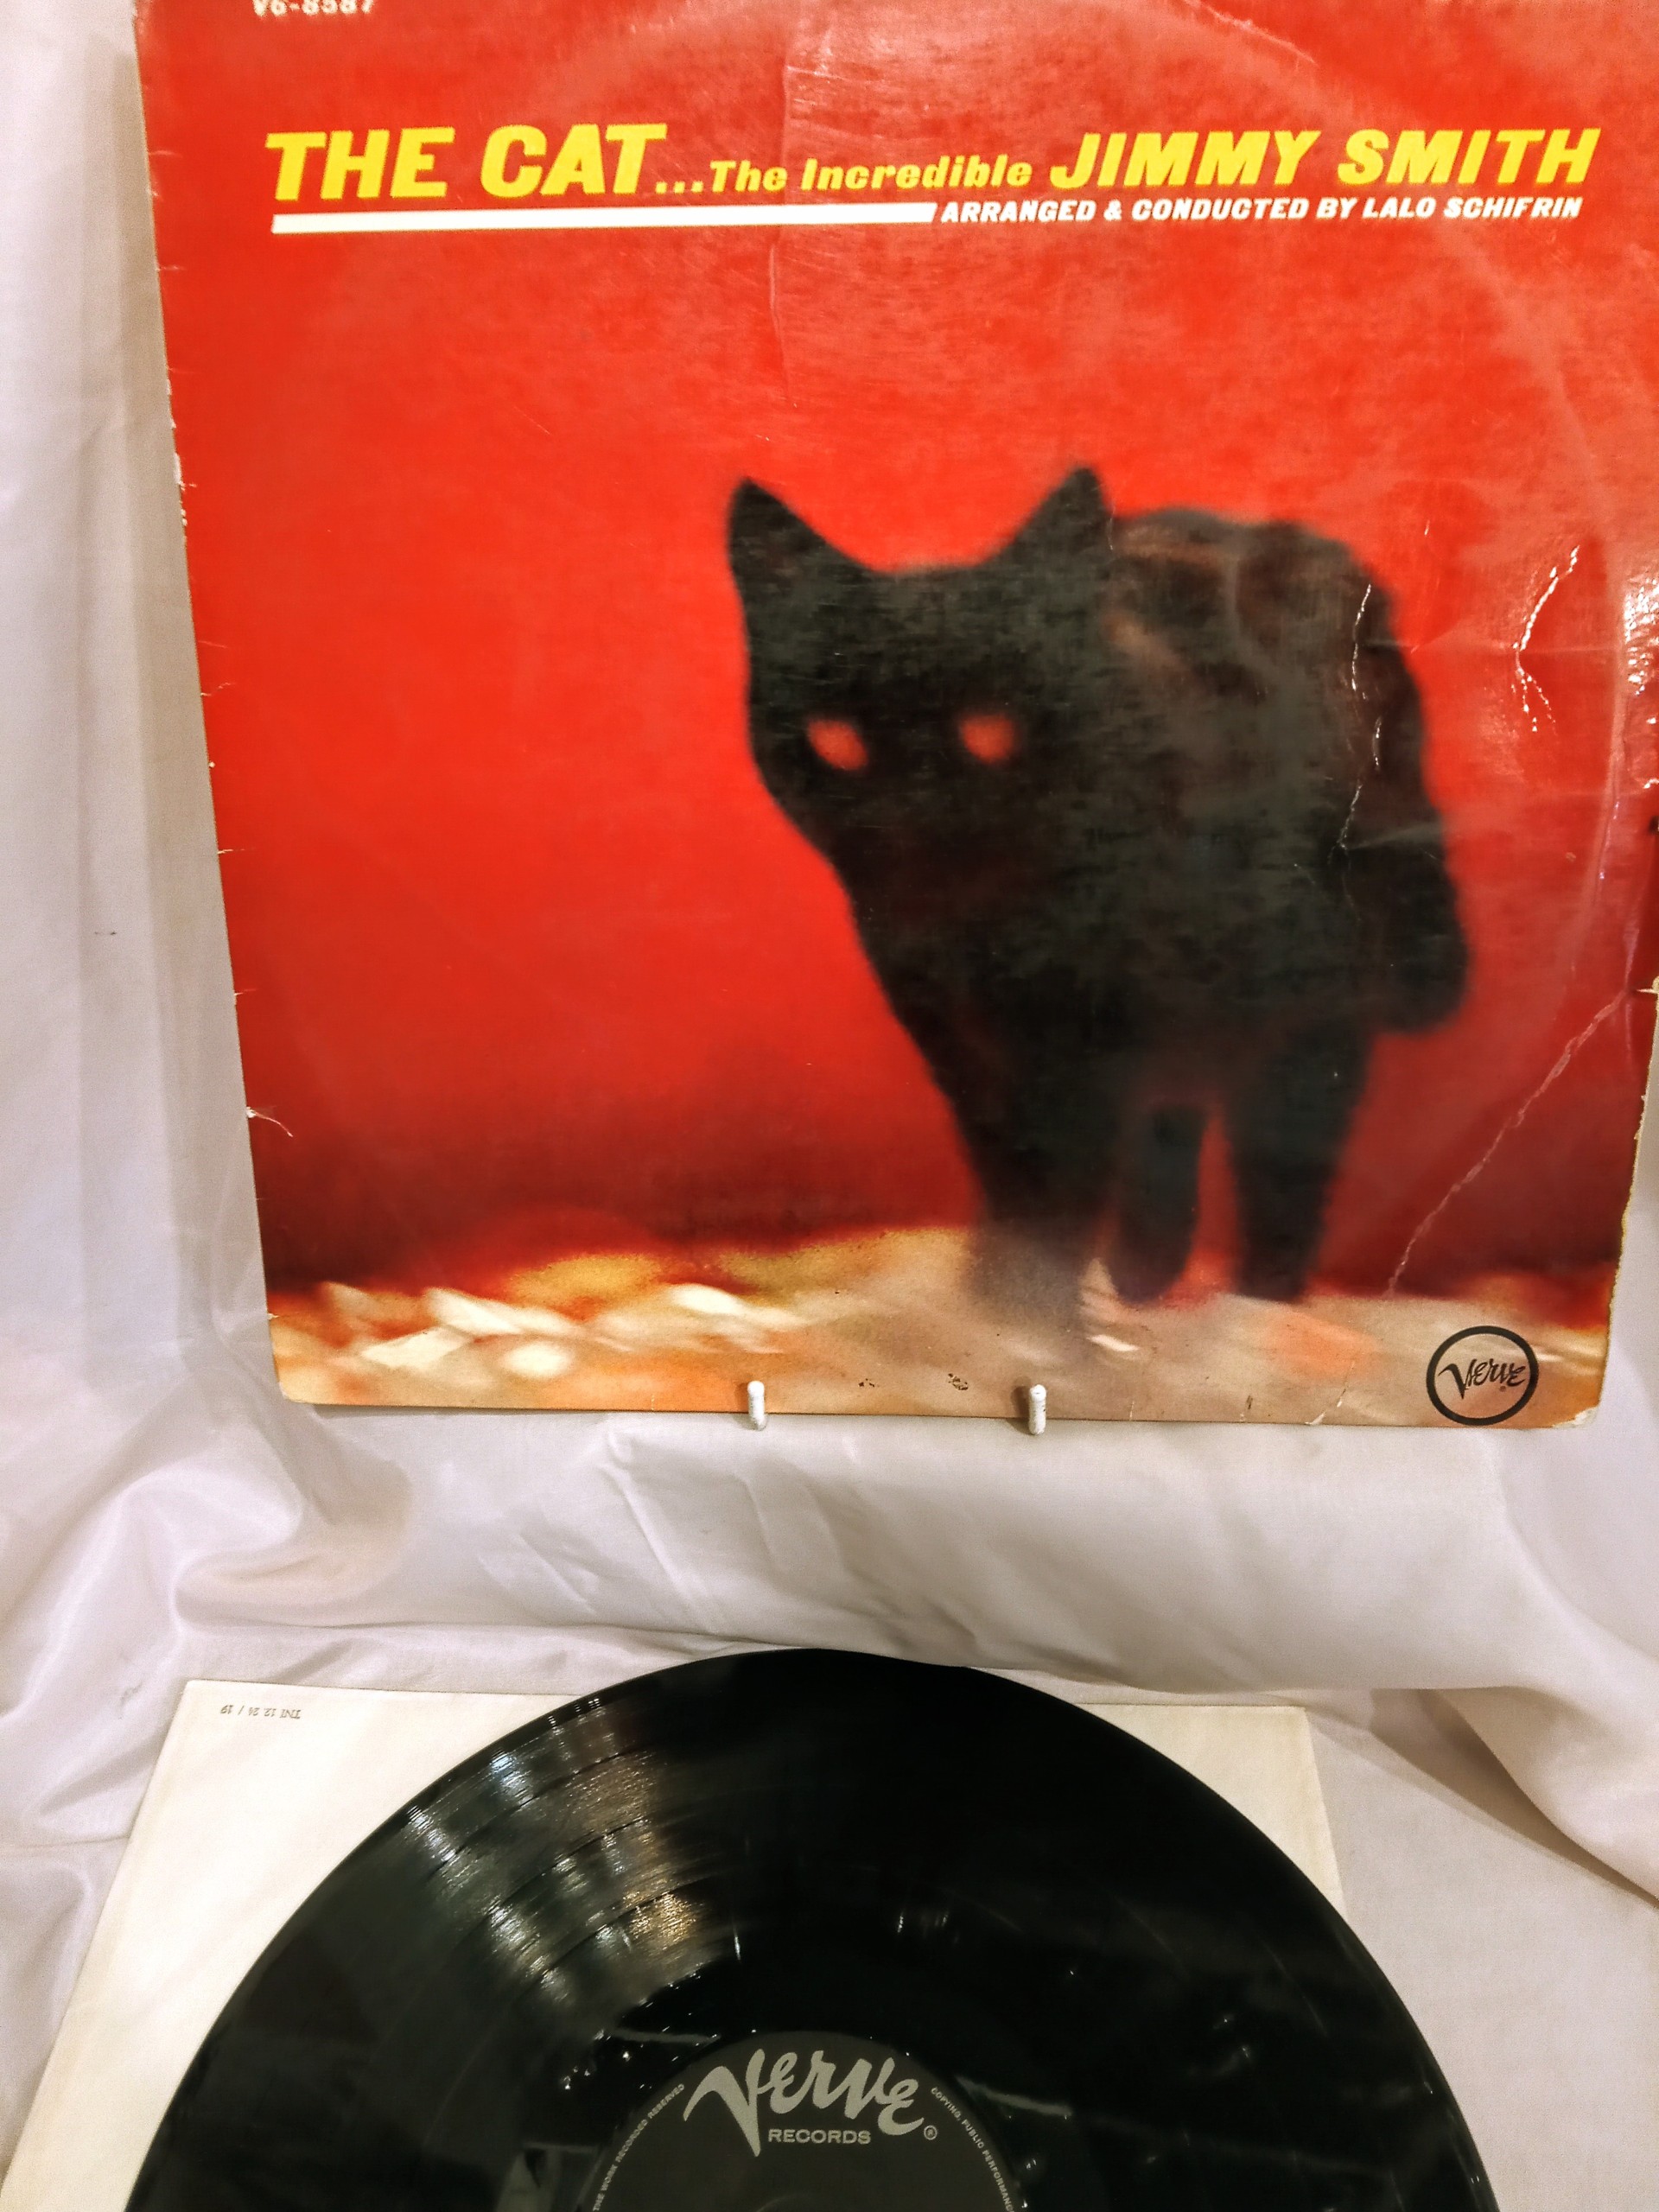 The Cat by Jimmy Smith on VERVE Records